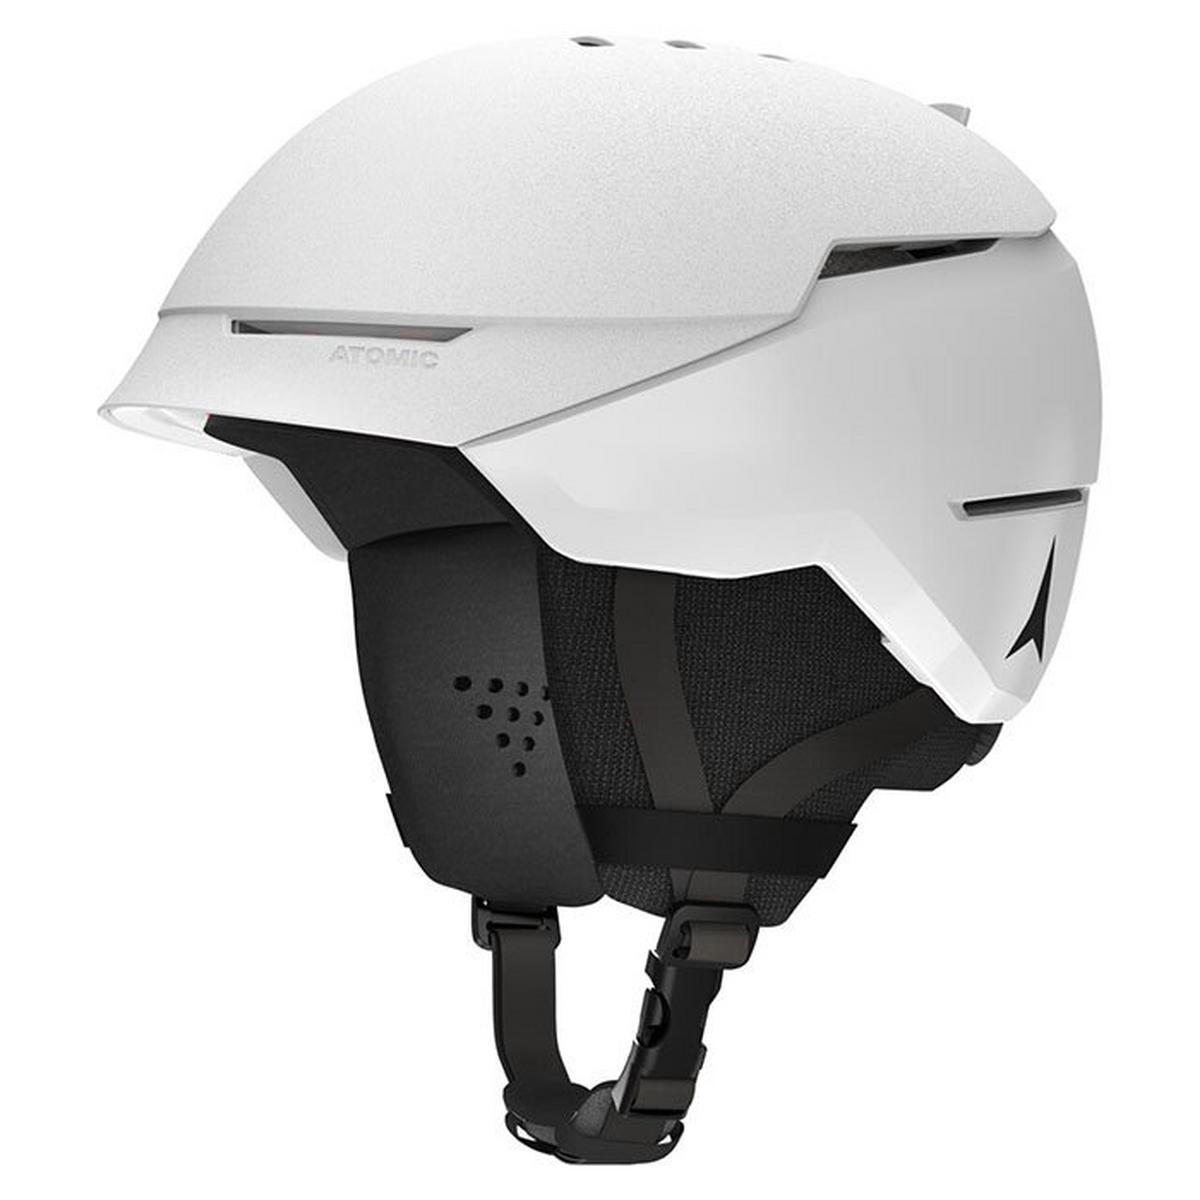 Nomad Snow Helmet (Asian Fit)